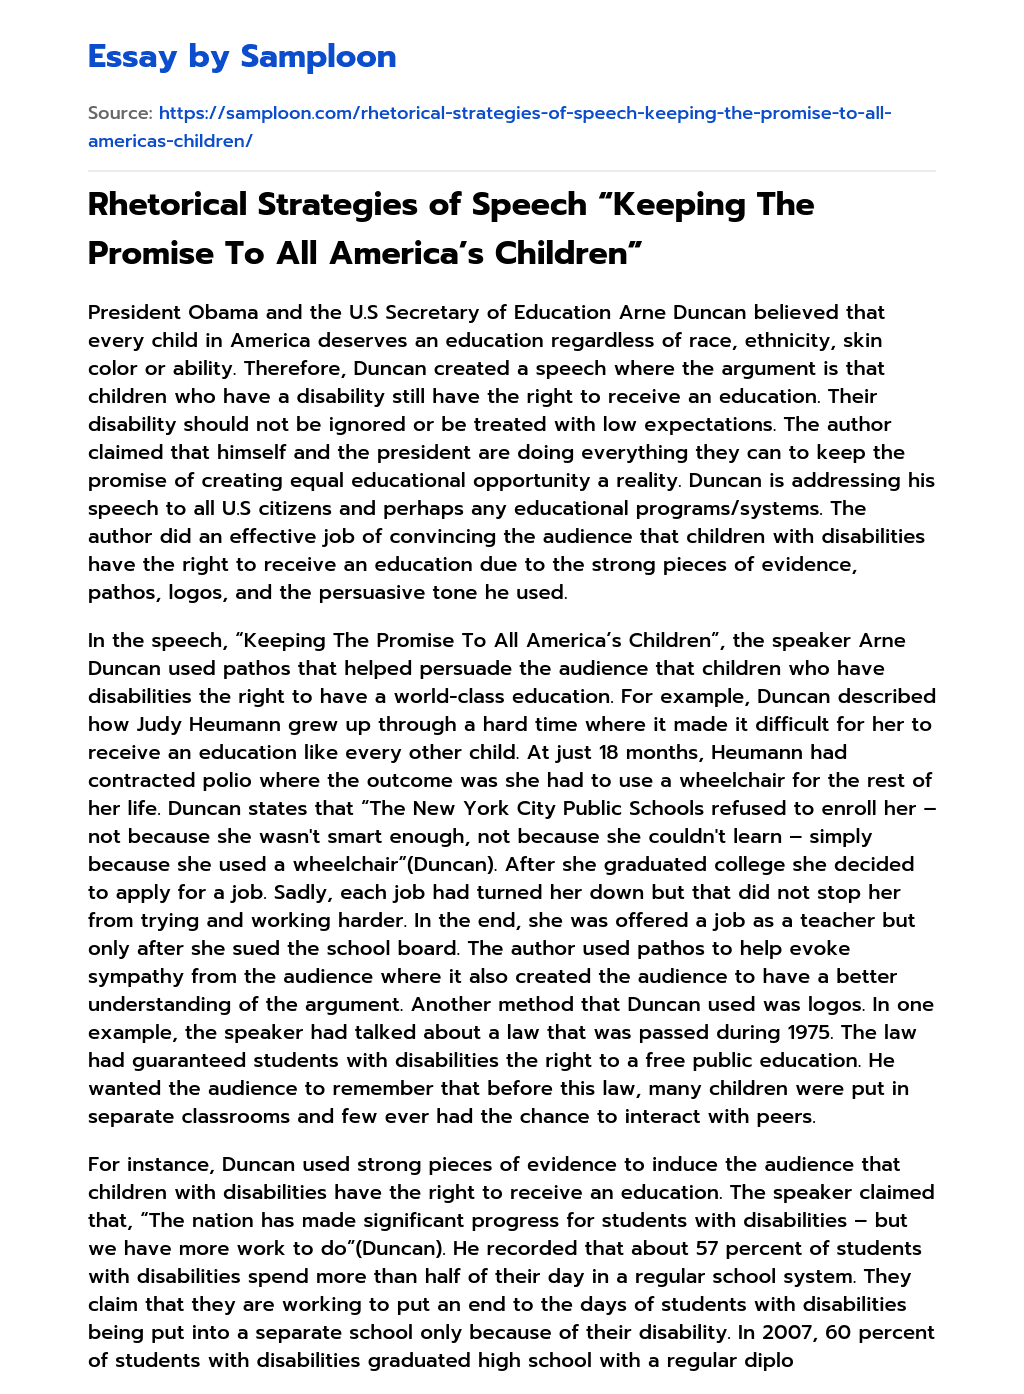 Rhetorical Strategies of Speech “Keeping The Promise To All America’s Children” essay